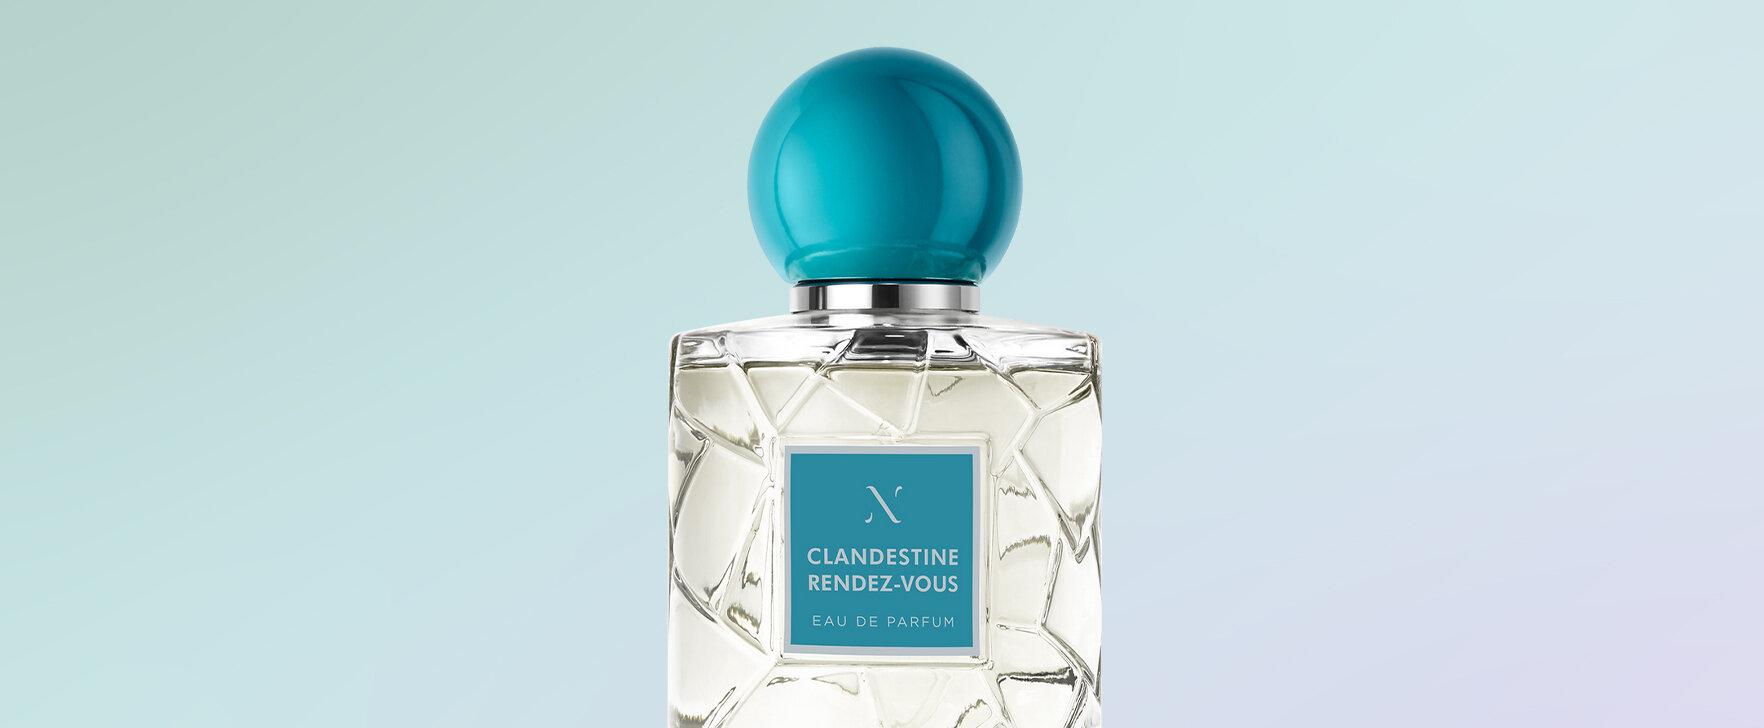 Die Essenz einer Pariser Liebesaffäre: Das neue Eau de Parfum „Clandestine Rendez-vous“ von Les Sœurs de Noé